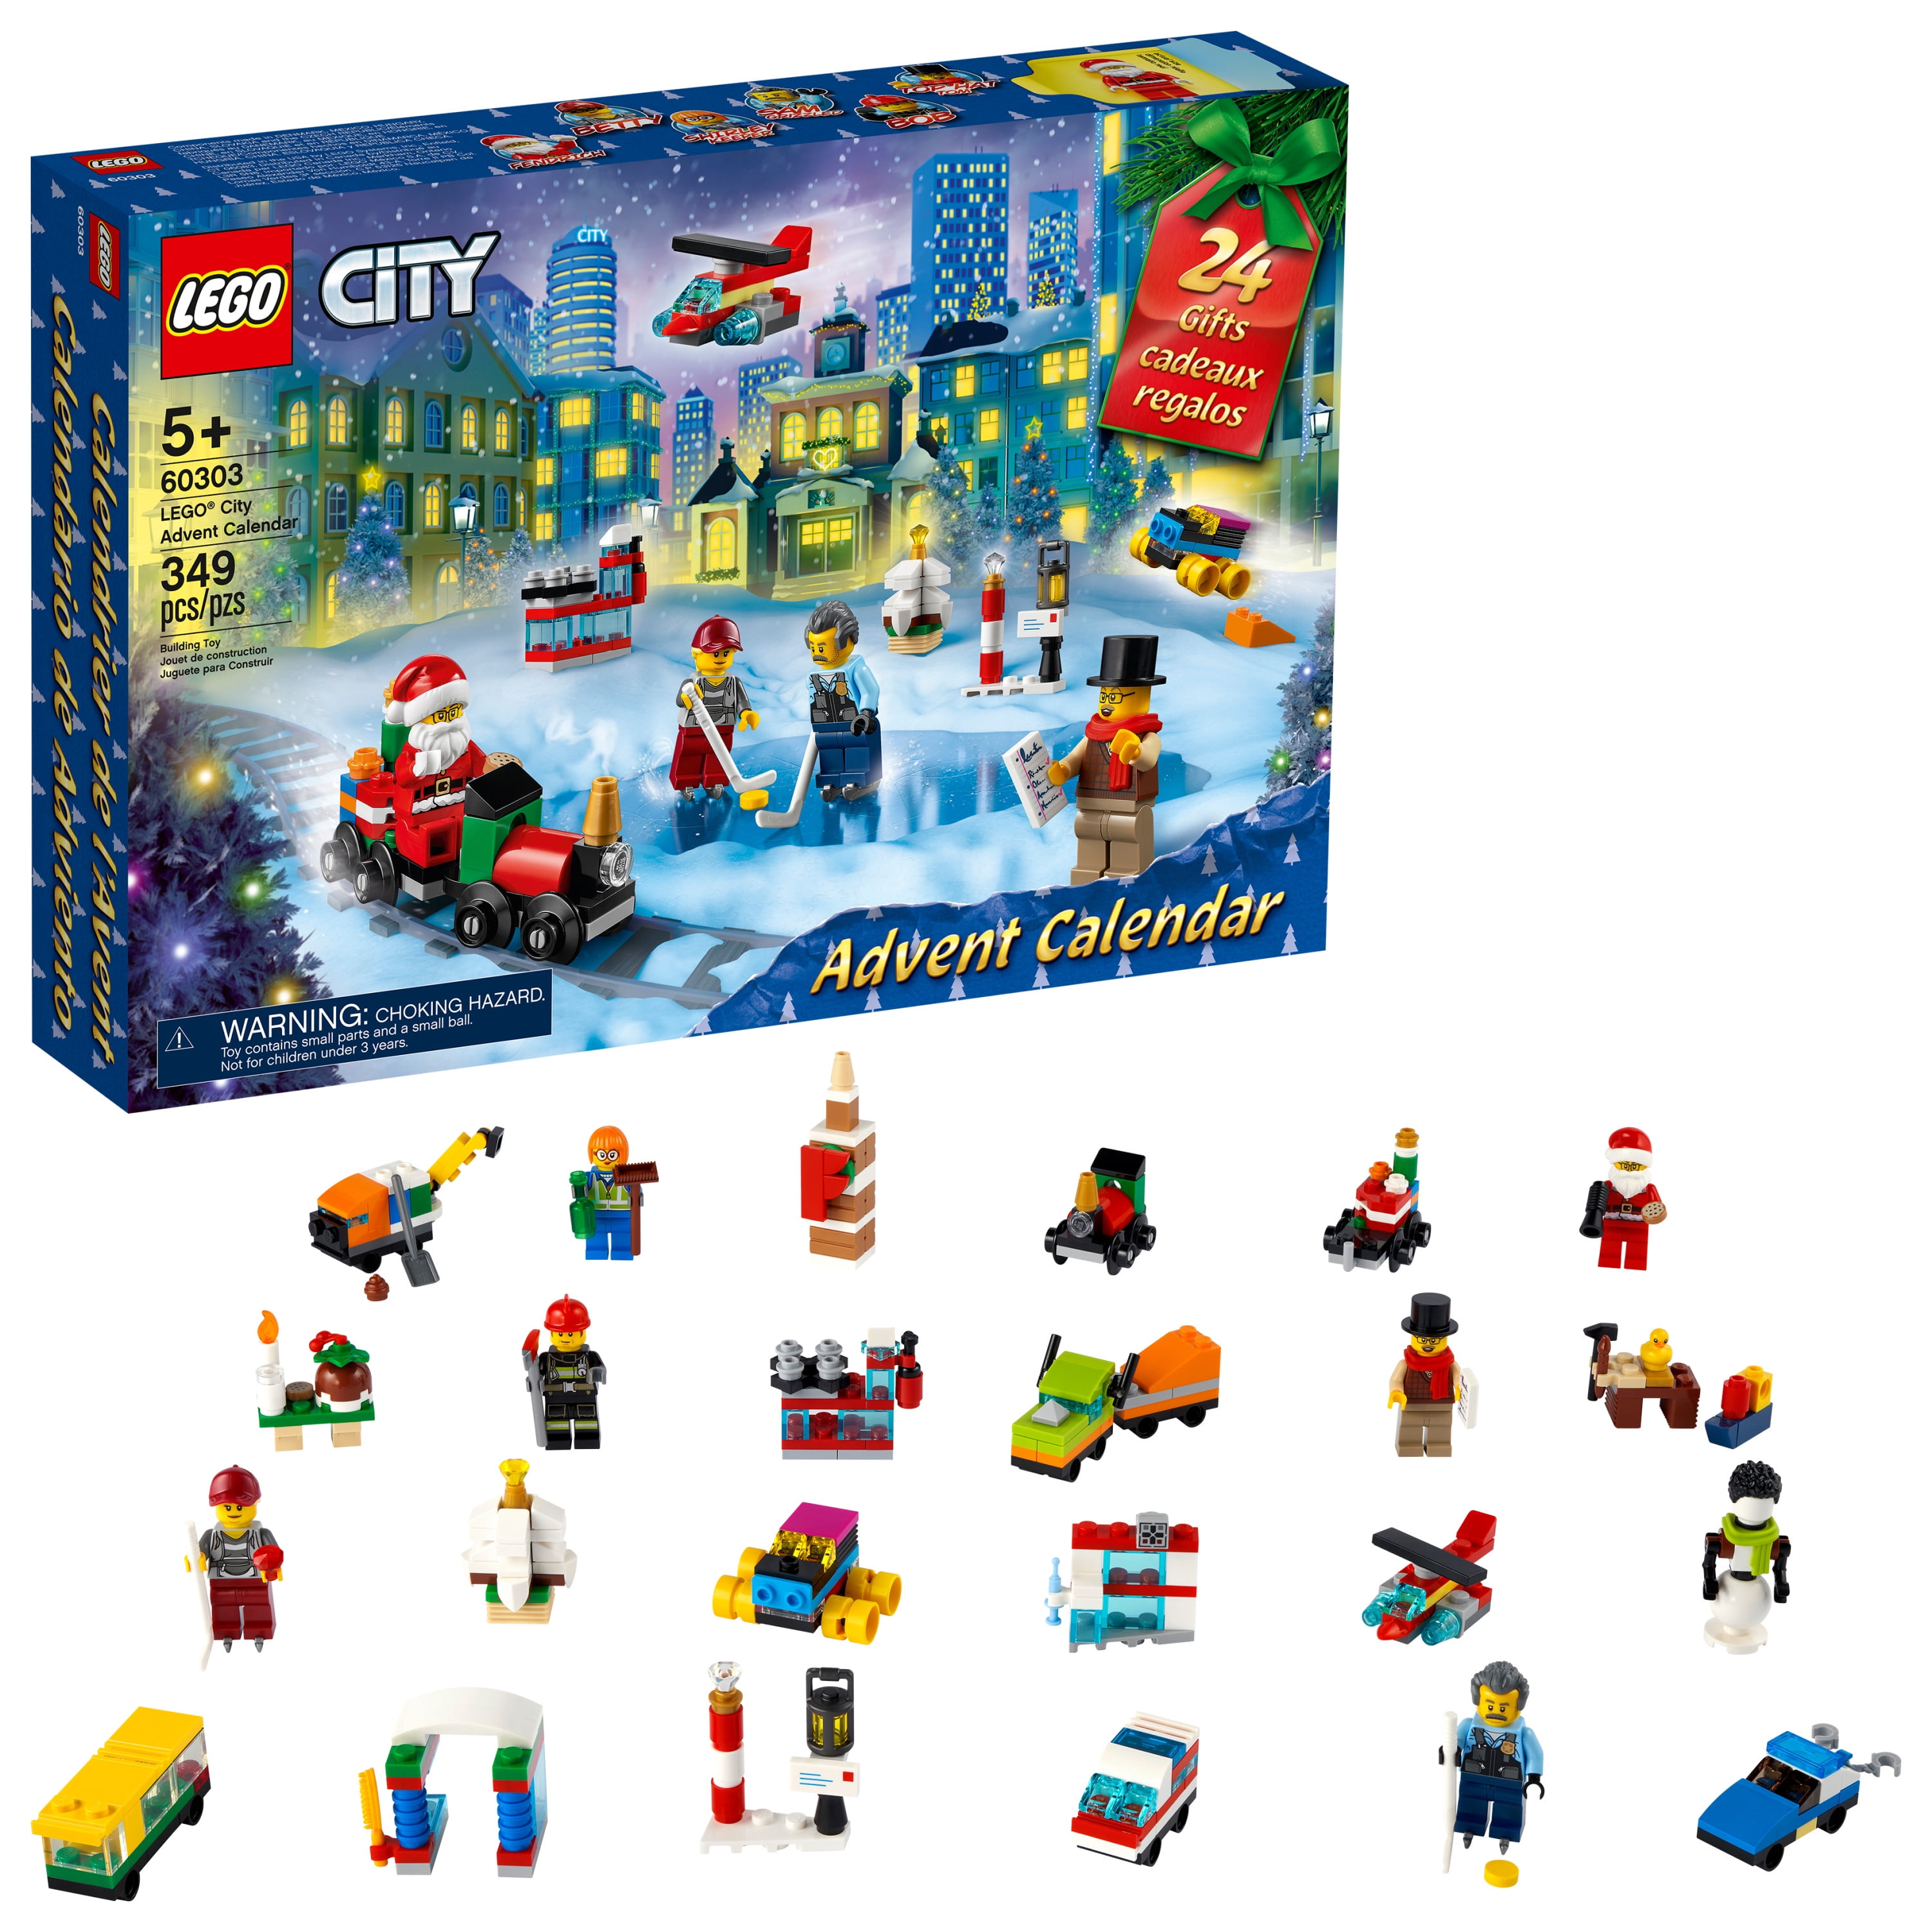 verden nedenunder sukker LEGO City Advent Calendar 60303 Building Toy (349 Pieces) - Walmart.com